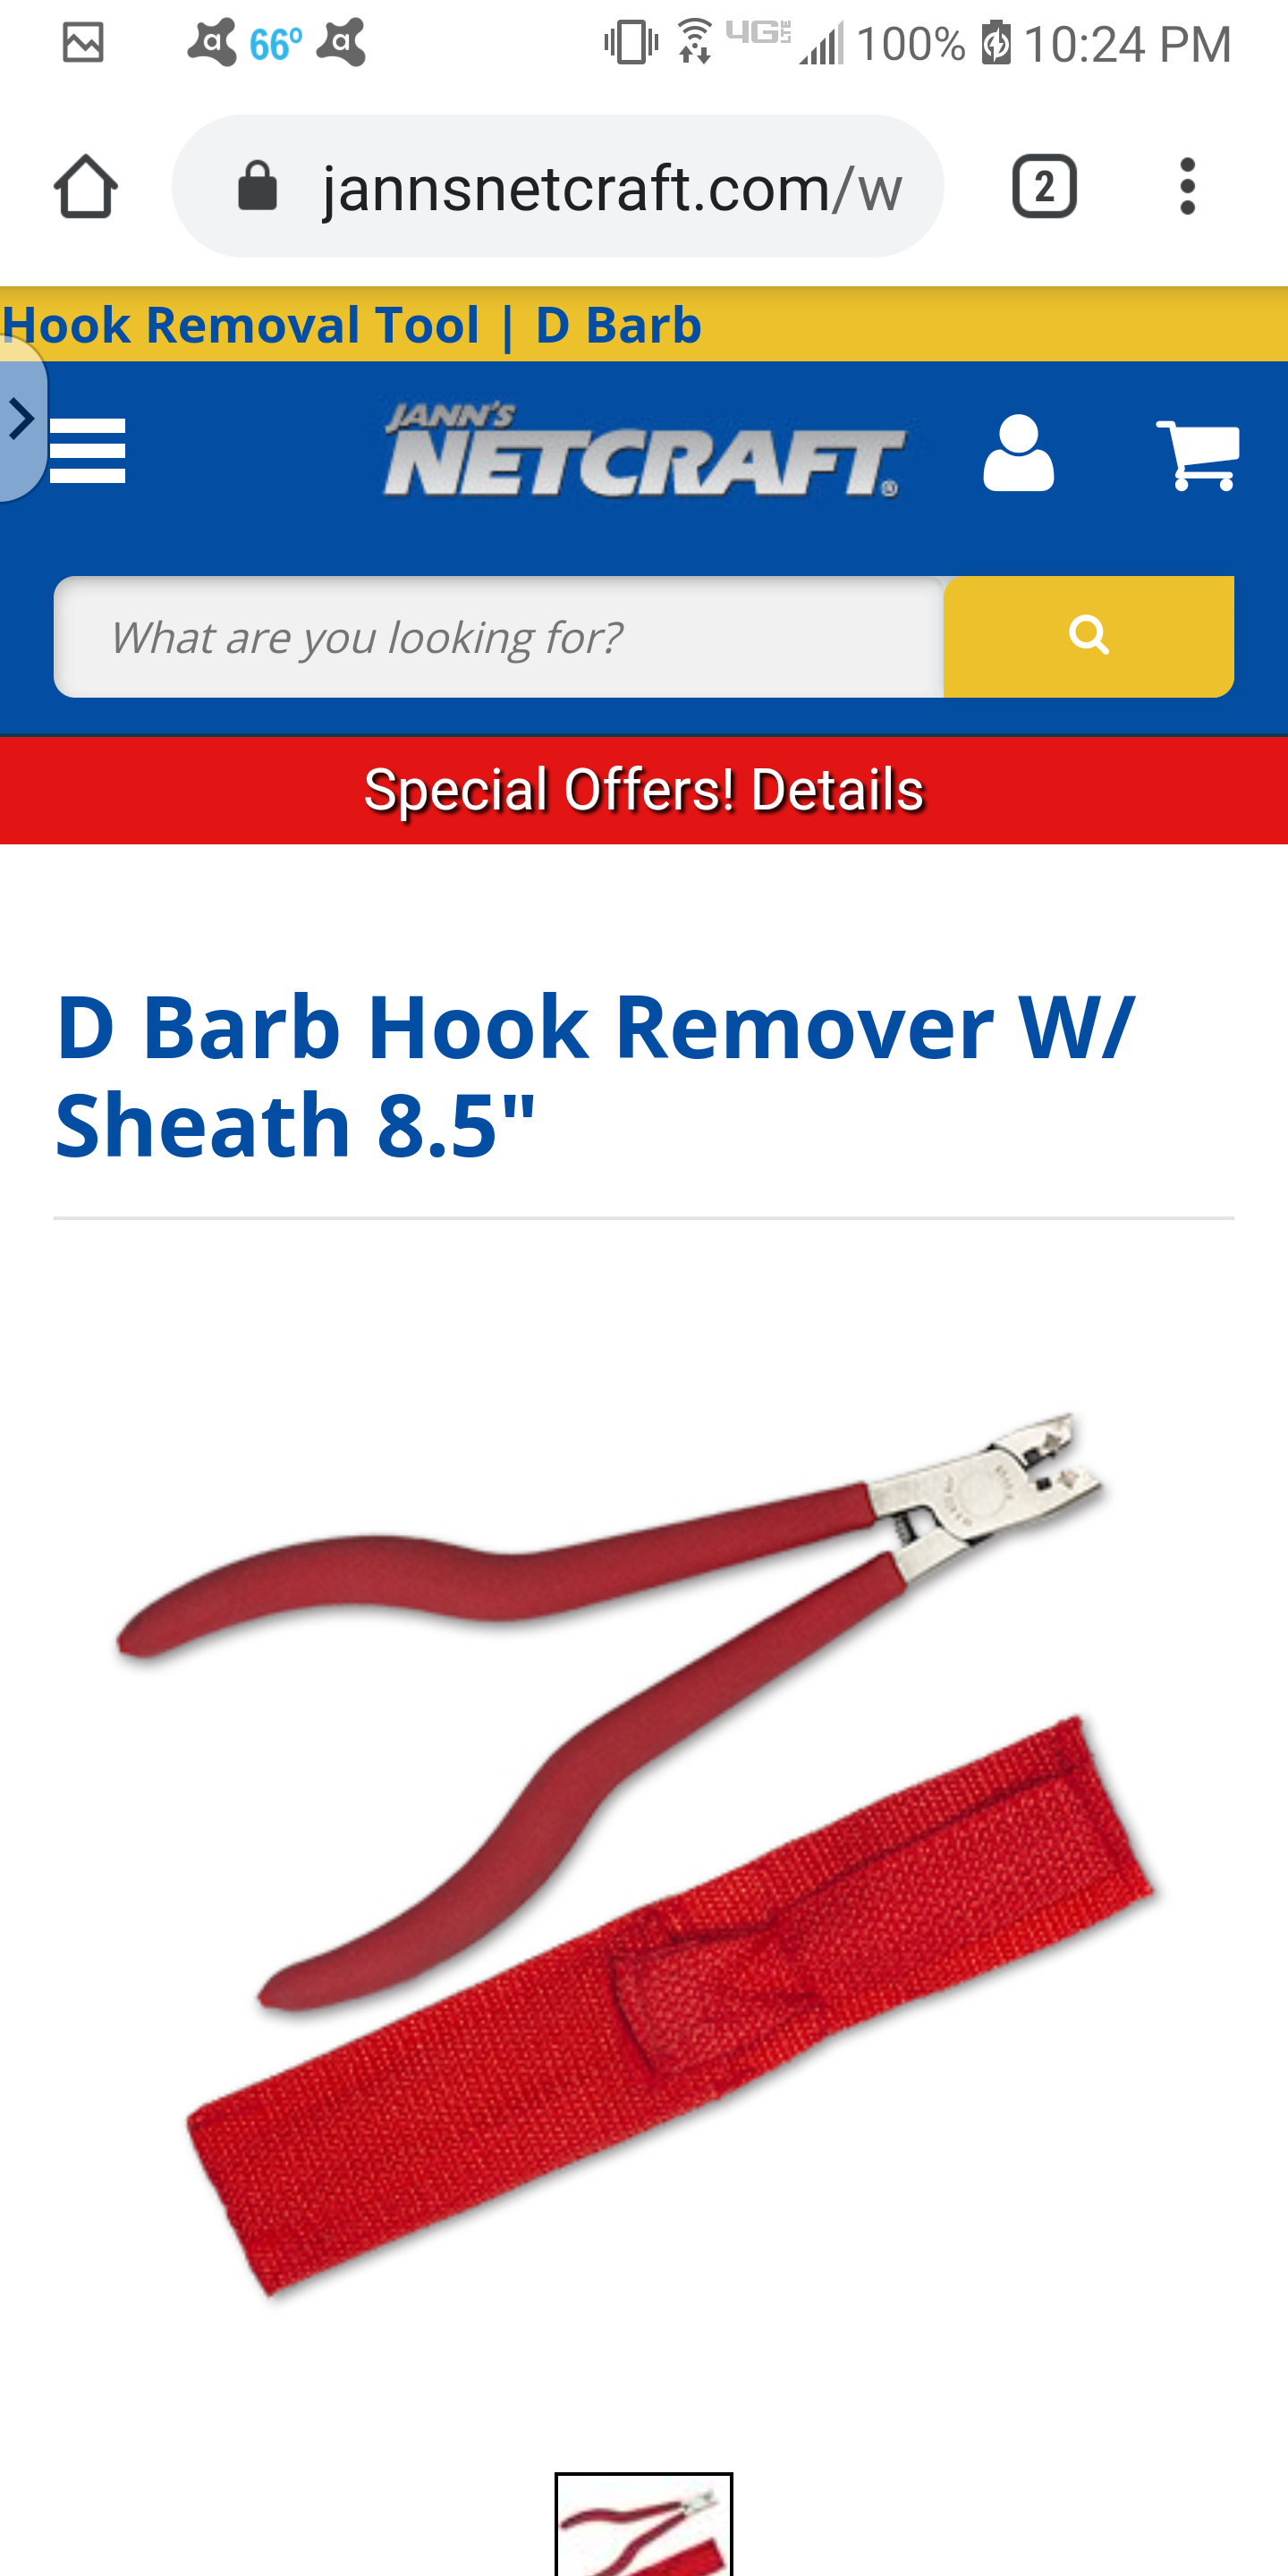 D Barb Hook Remover W/ Sheath 8.5